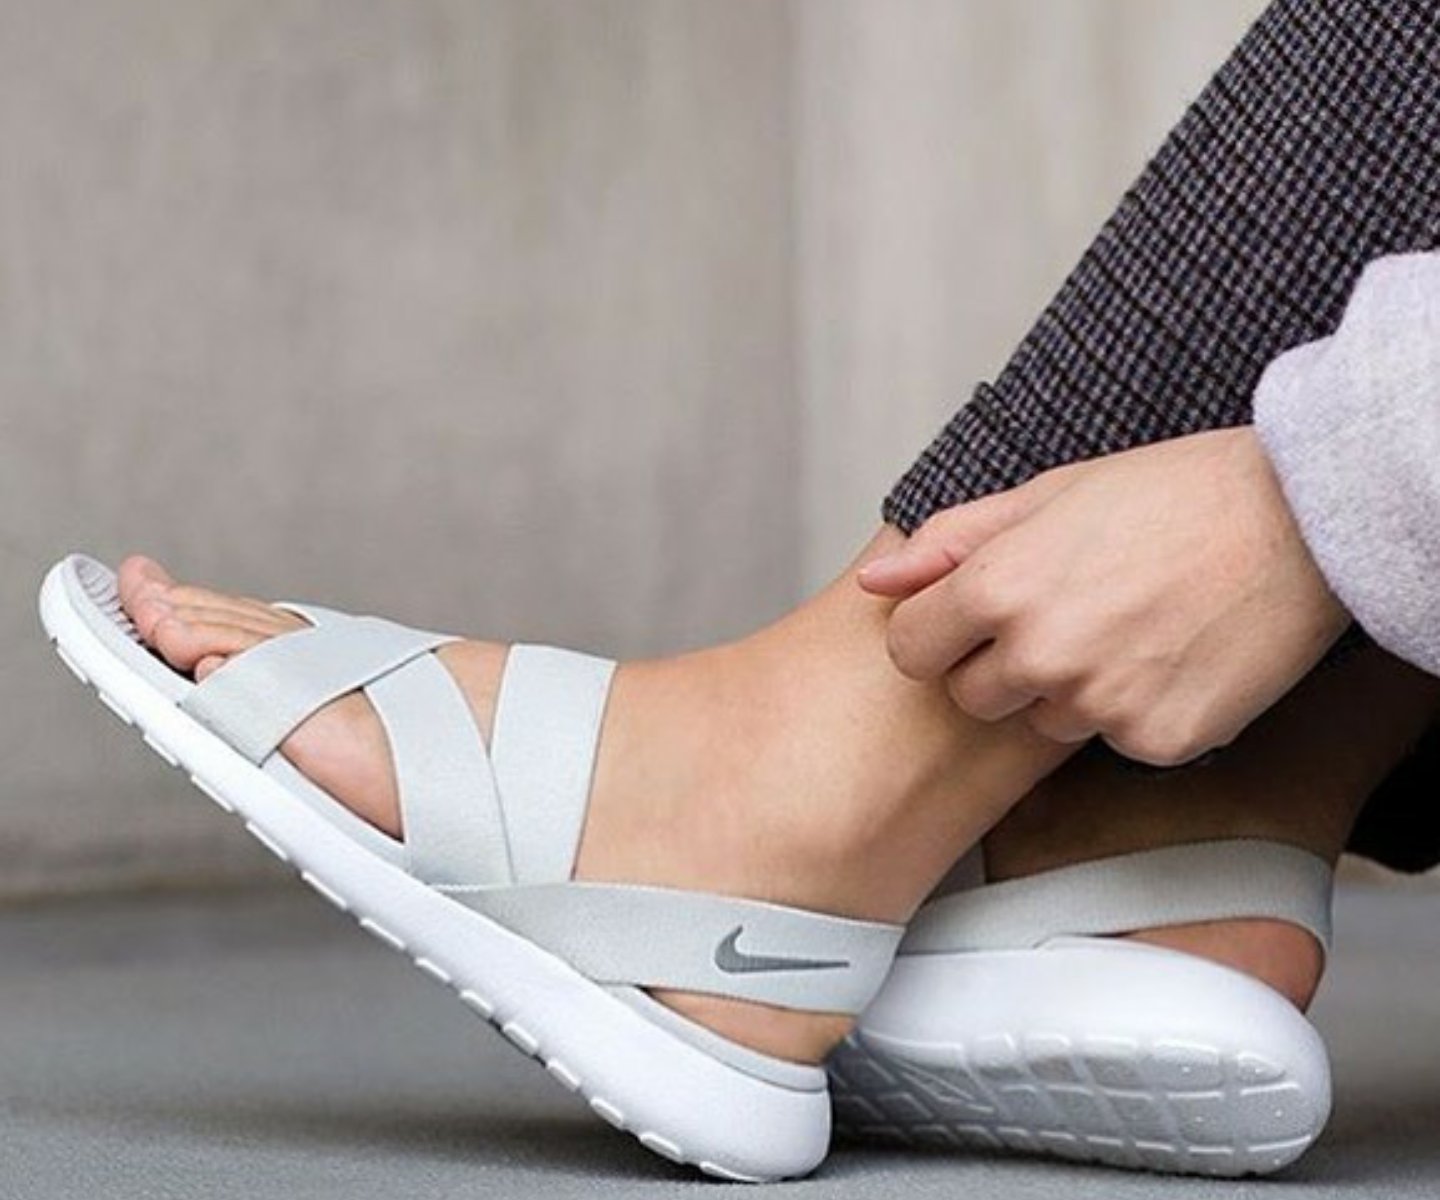 Rico Biblioteca troncal Firmar Ahnyoung_preorder on Twitter: "Nike Roshe one Sandal Size: 23-26cm ราคา:  4,800฿ ส่งฟรี #AYproducts #มัดจำหรือผ่อนได้ https://t.co/uUdsZm0EBm" /  Twitter